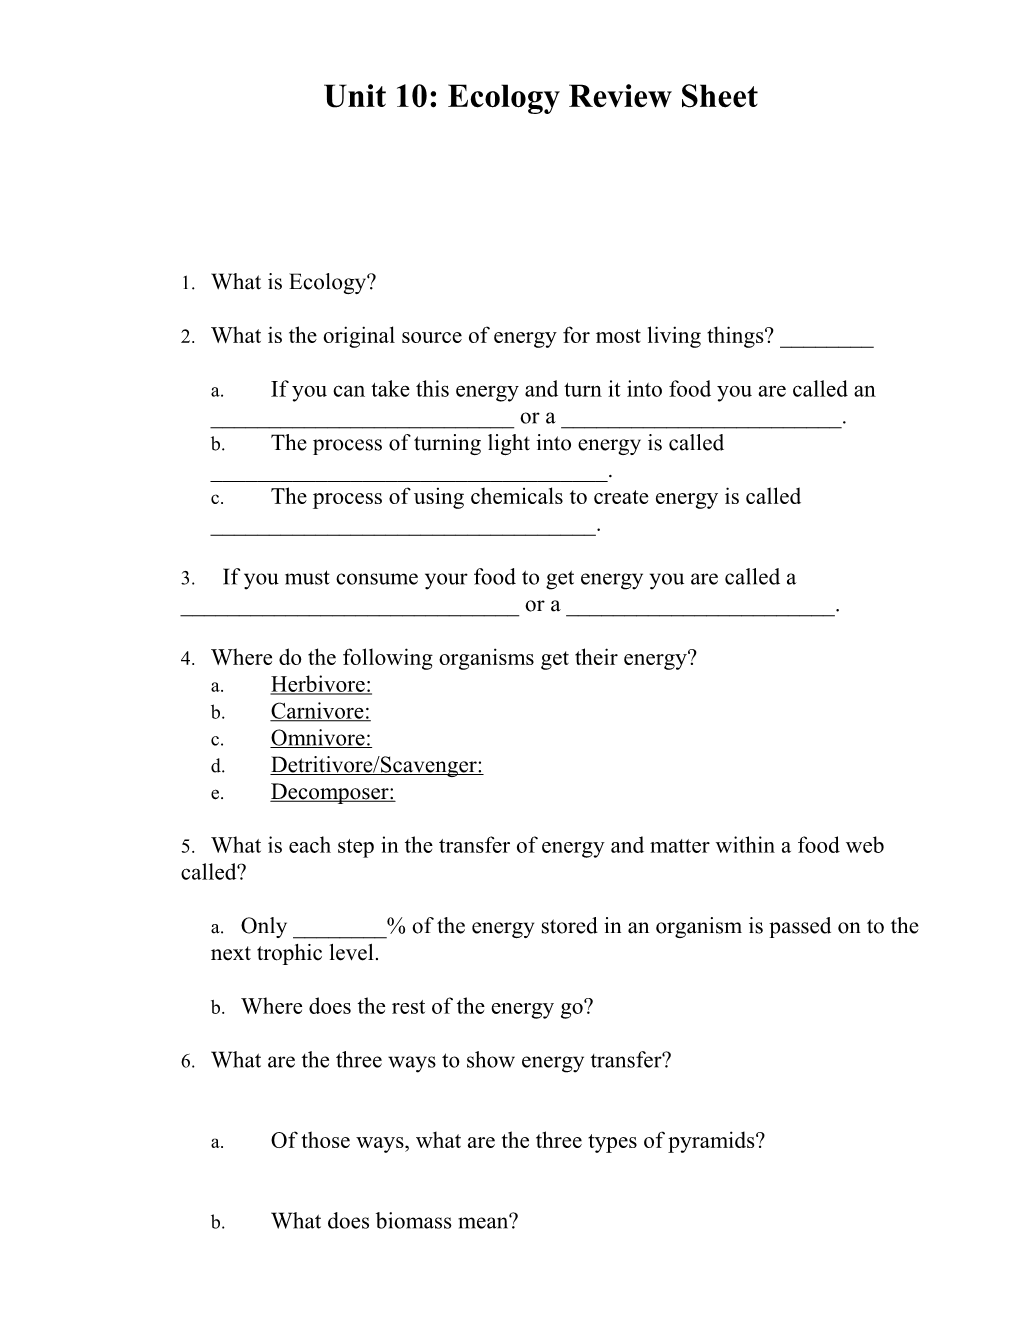 Unit 2: Ecology Review Sheet